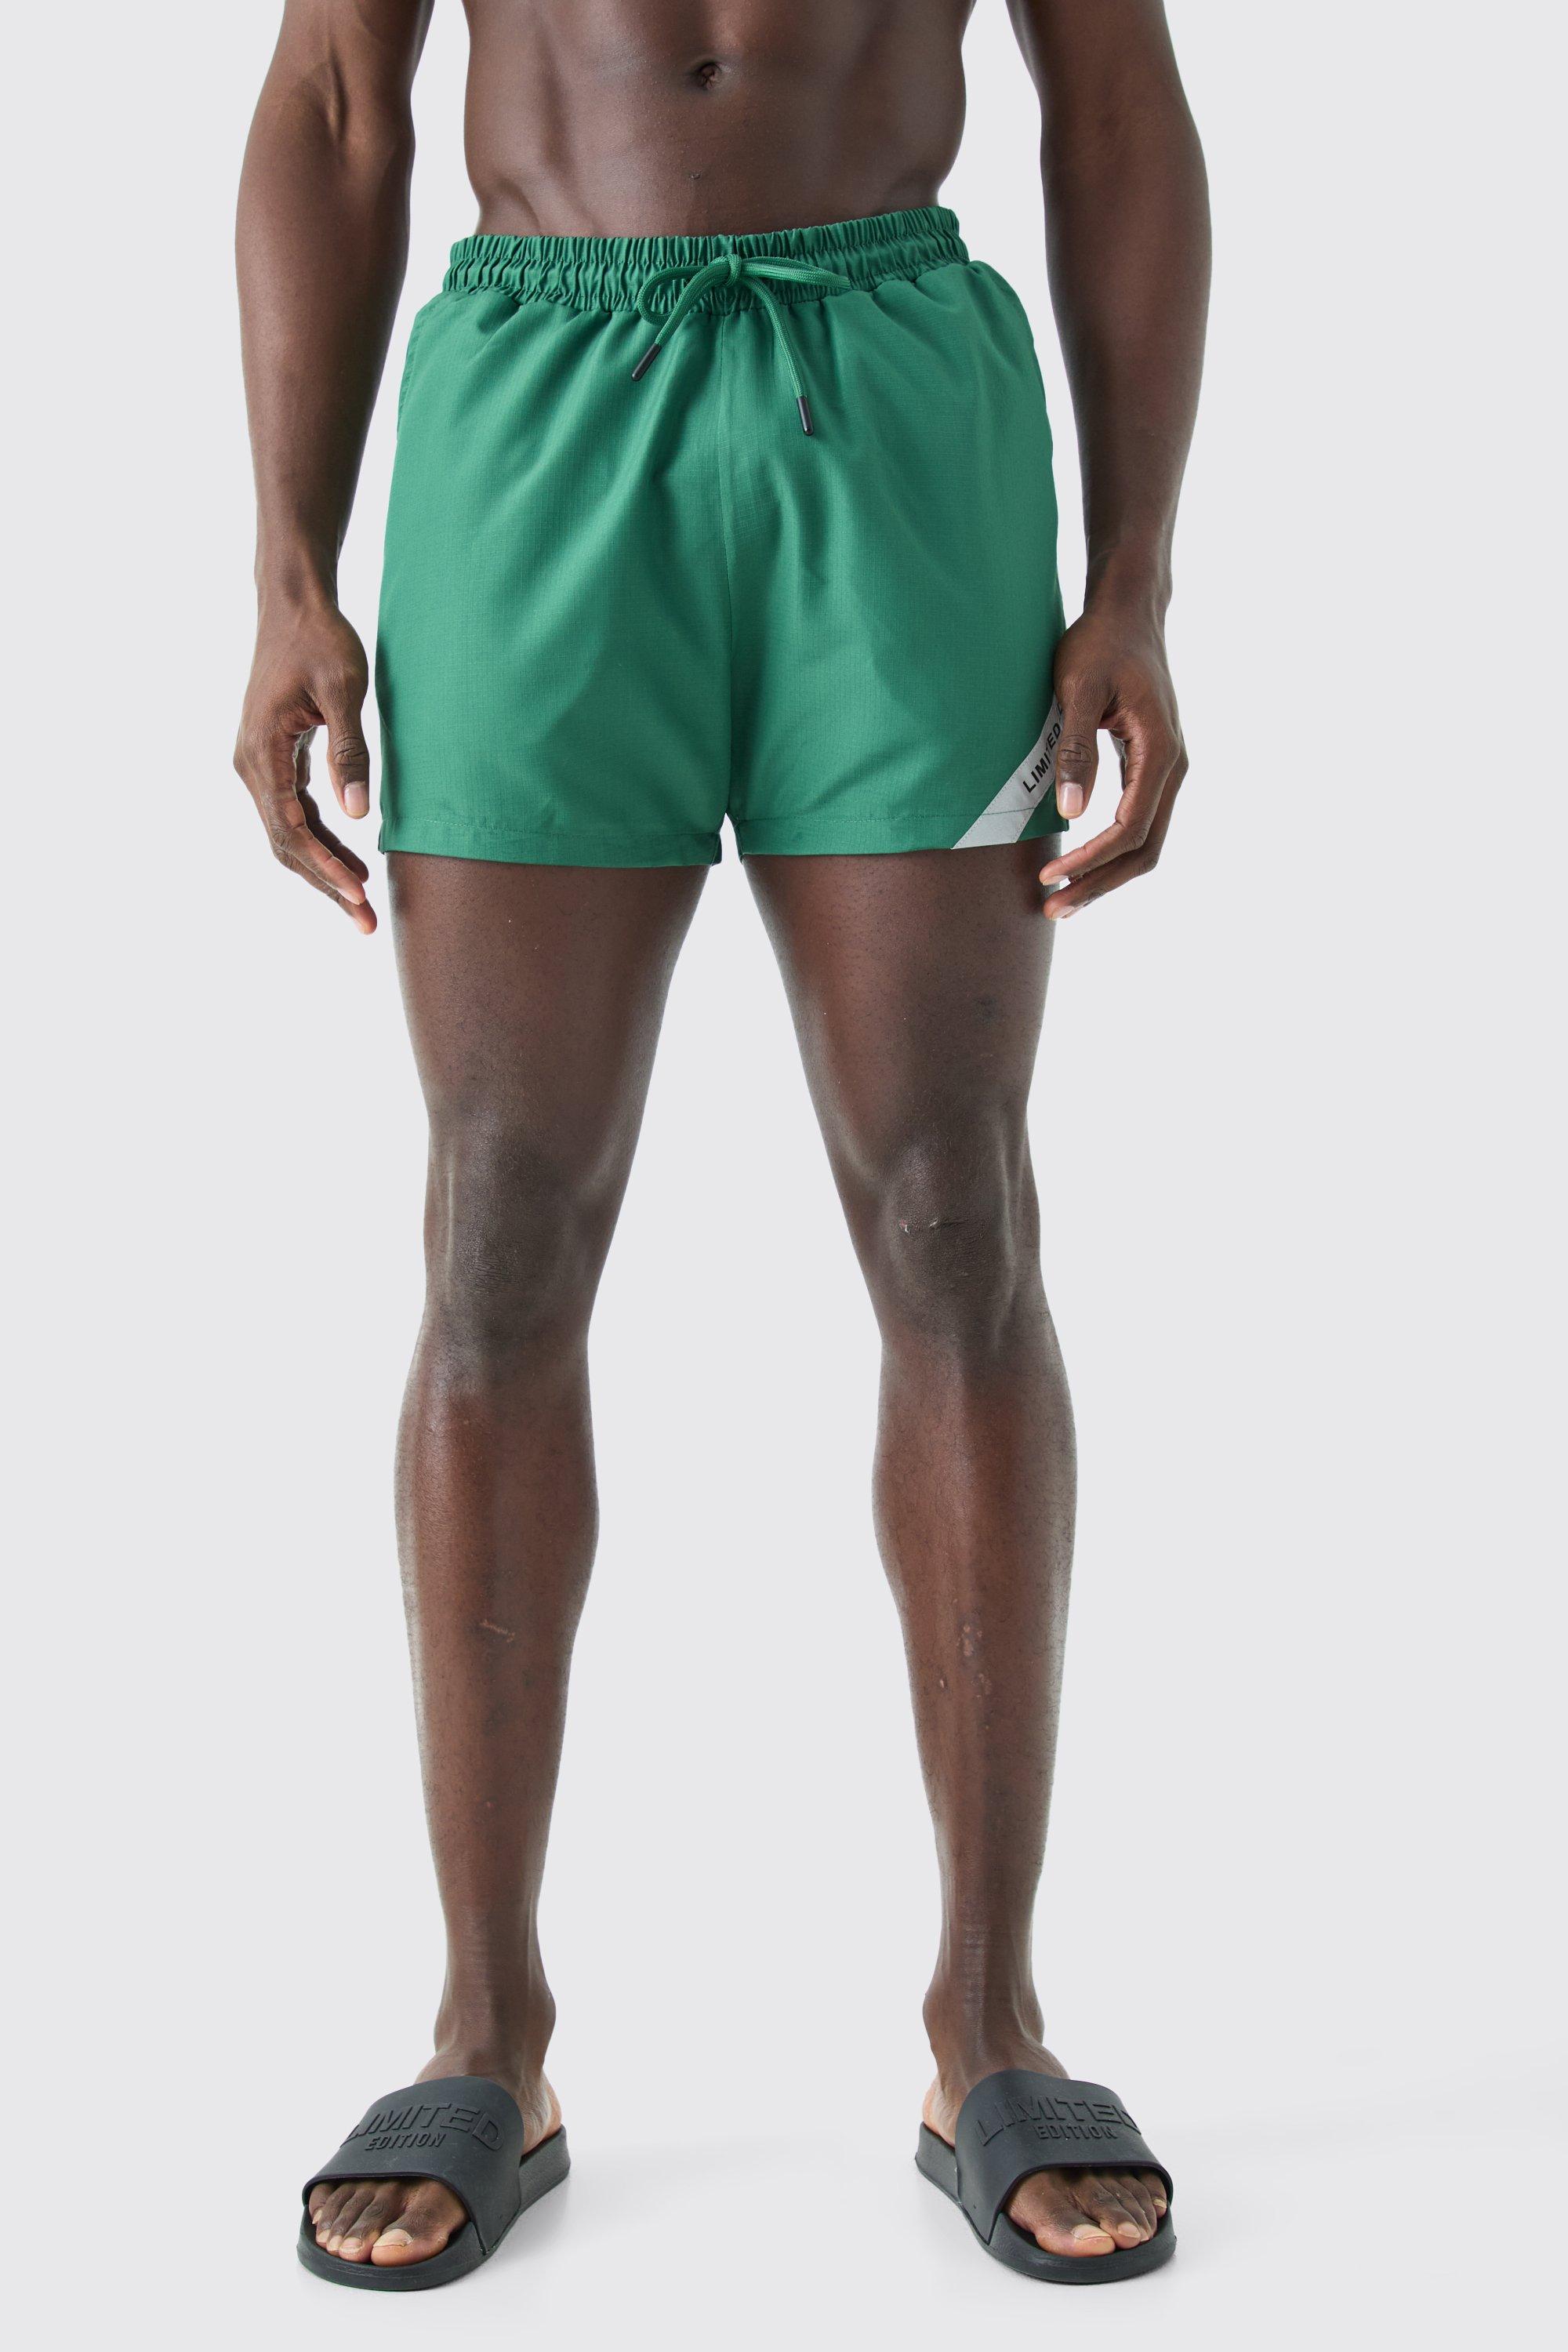 Image of Costume a pantaloncino corto in nylon ripstop Limited Edition, Verde